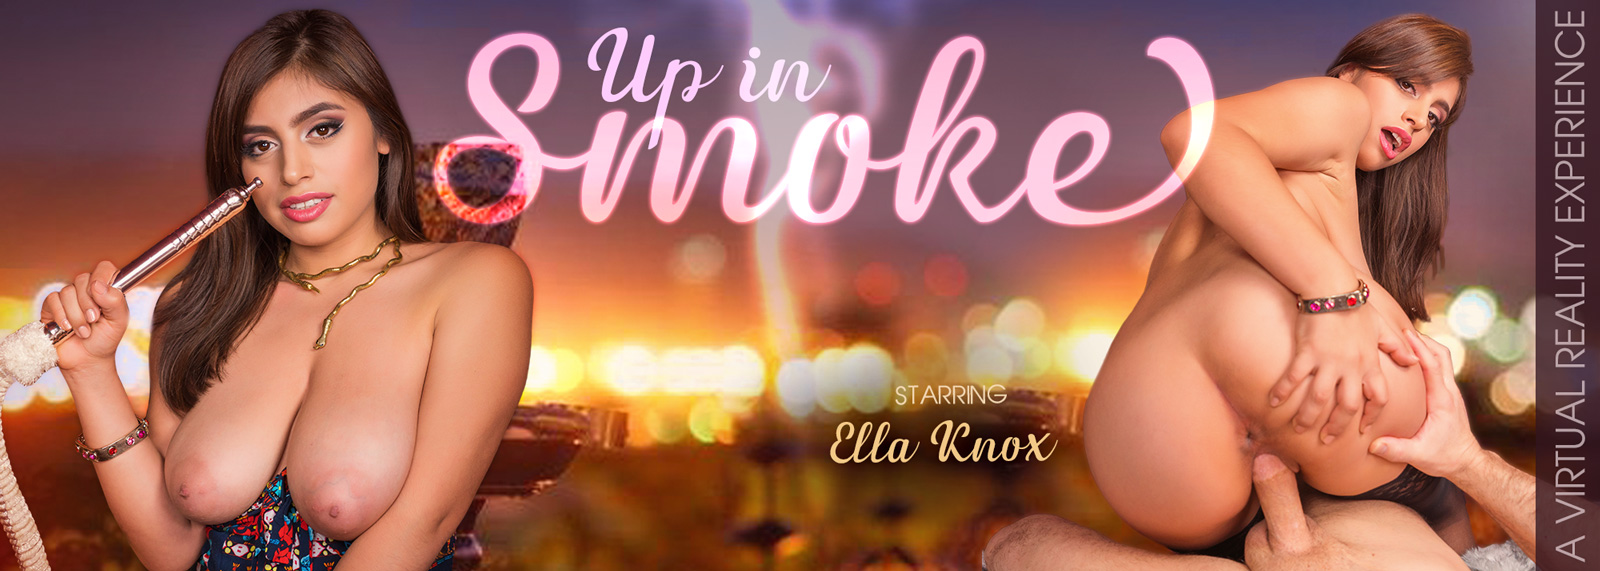 Up In Smoke - VR Porn Video, Starring: Ella Knox